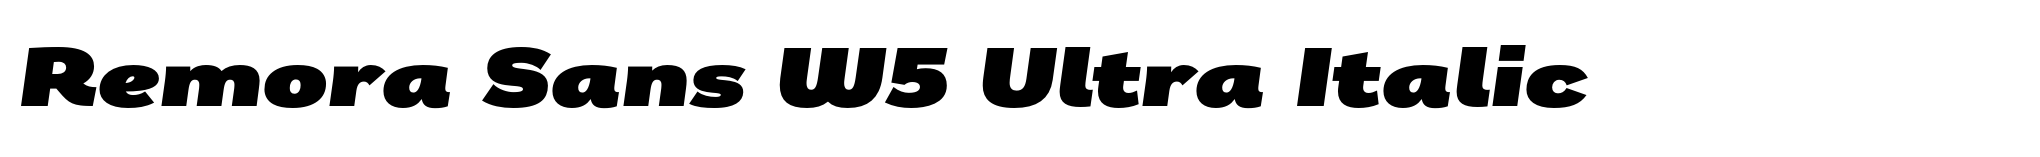 Remora Sans W5 Ultra Italic image